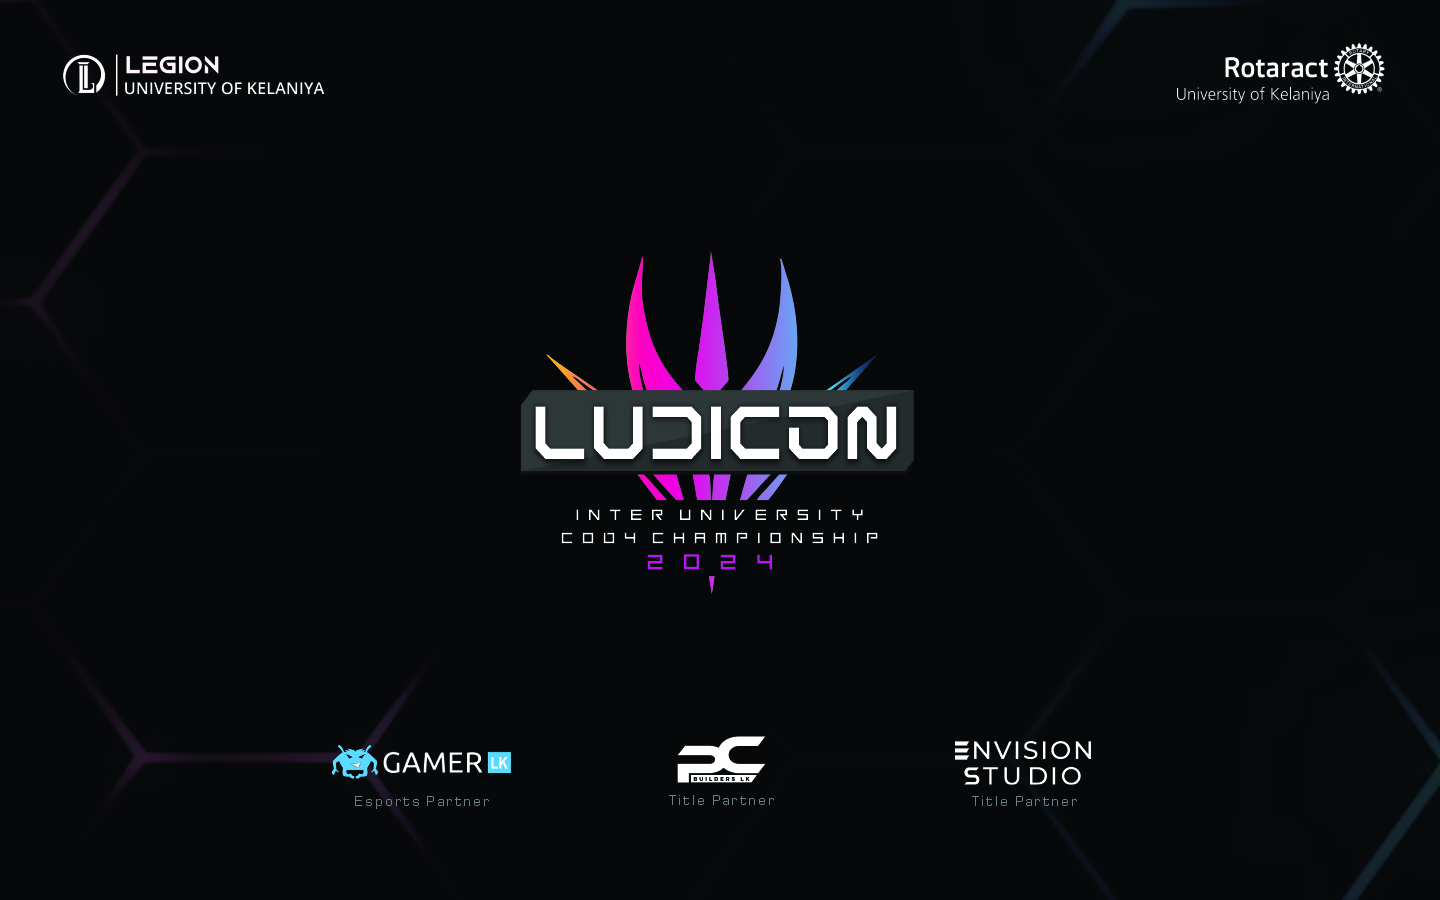 LUDICON (Inter University COD4 Championship)